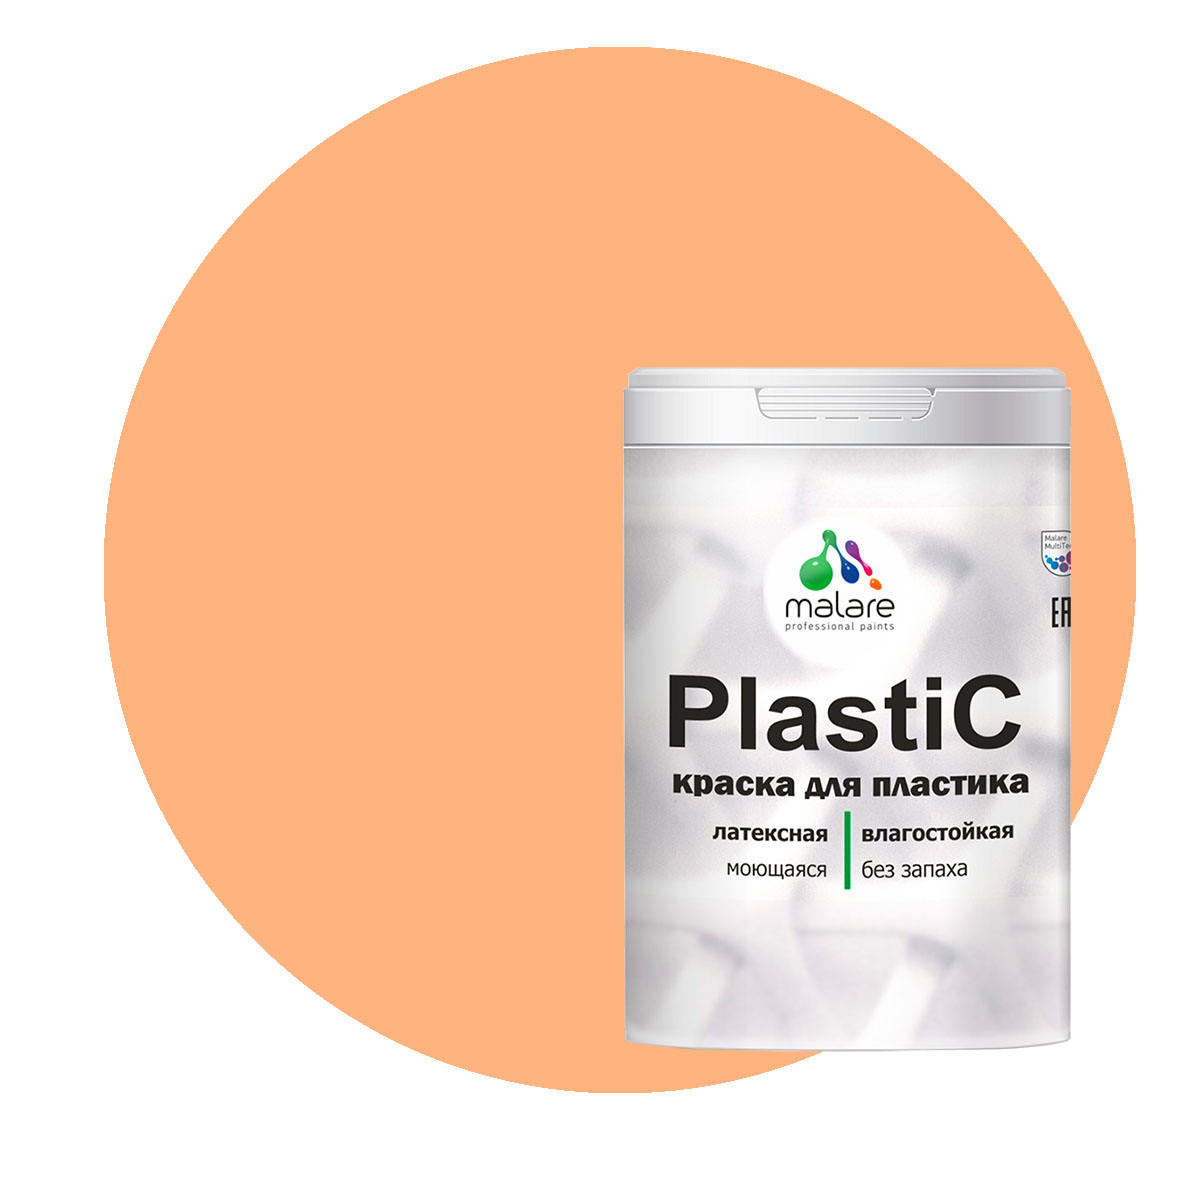 Краска Malare PlastiC для пластика, ПВХ, для сайдинга, свежая охра, 2 кг. краска malare plastic для пластика пвх для сайдинга античная латунь 2 кг